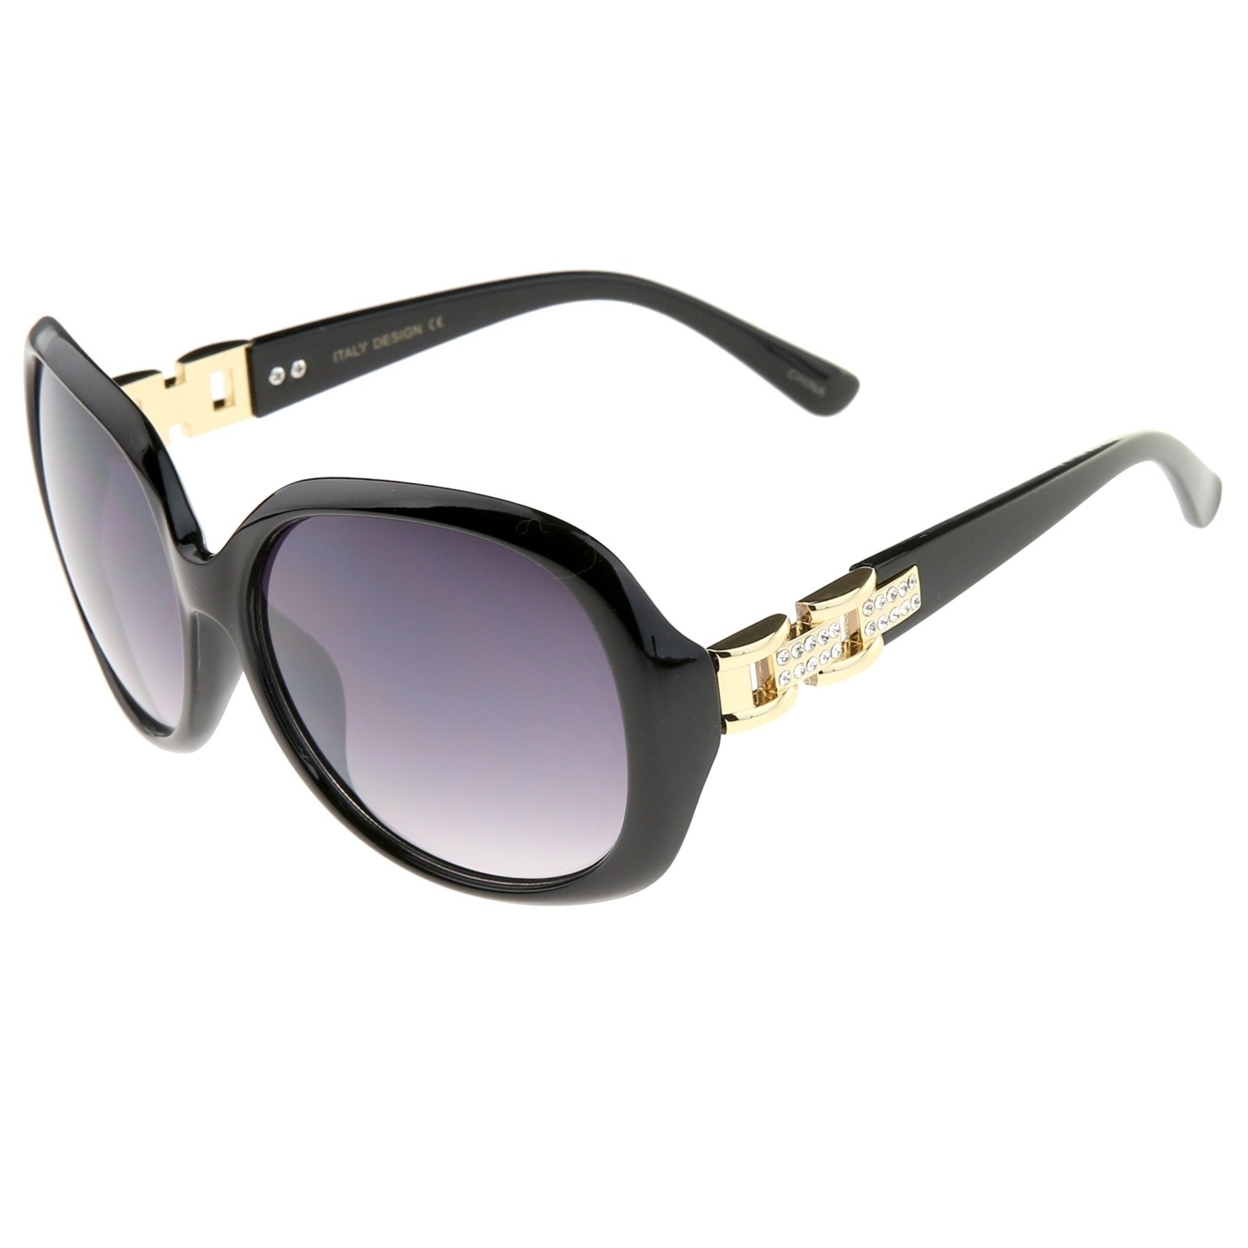 Women's Chain And Rhinestone Temple Round Oversize Sunglasses 60mm - Black / Lavender